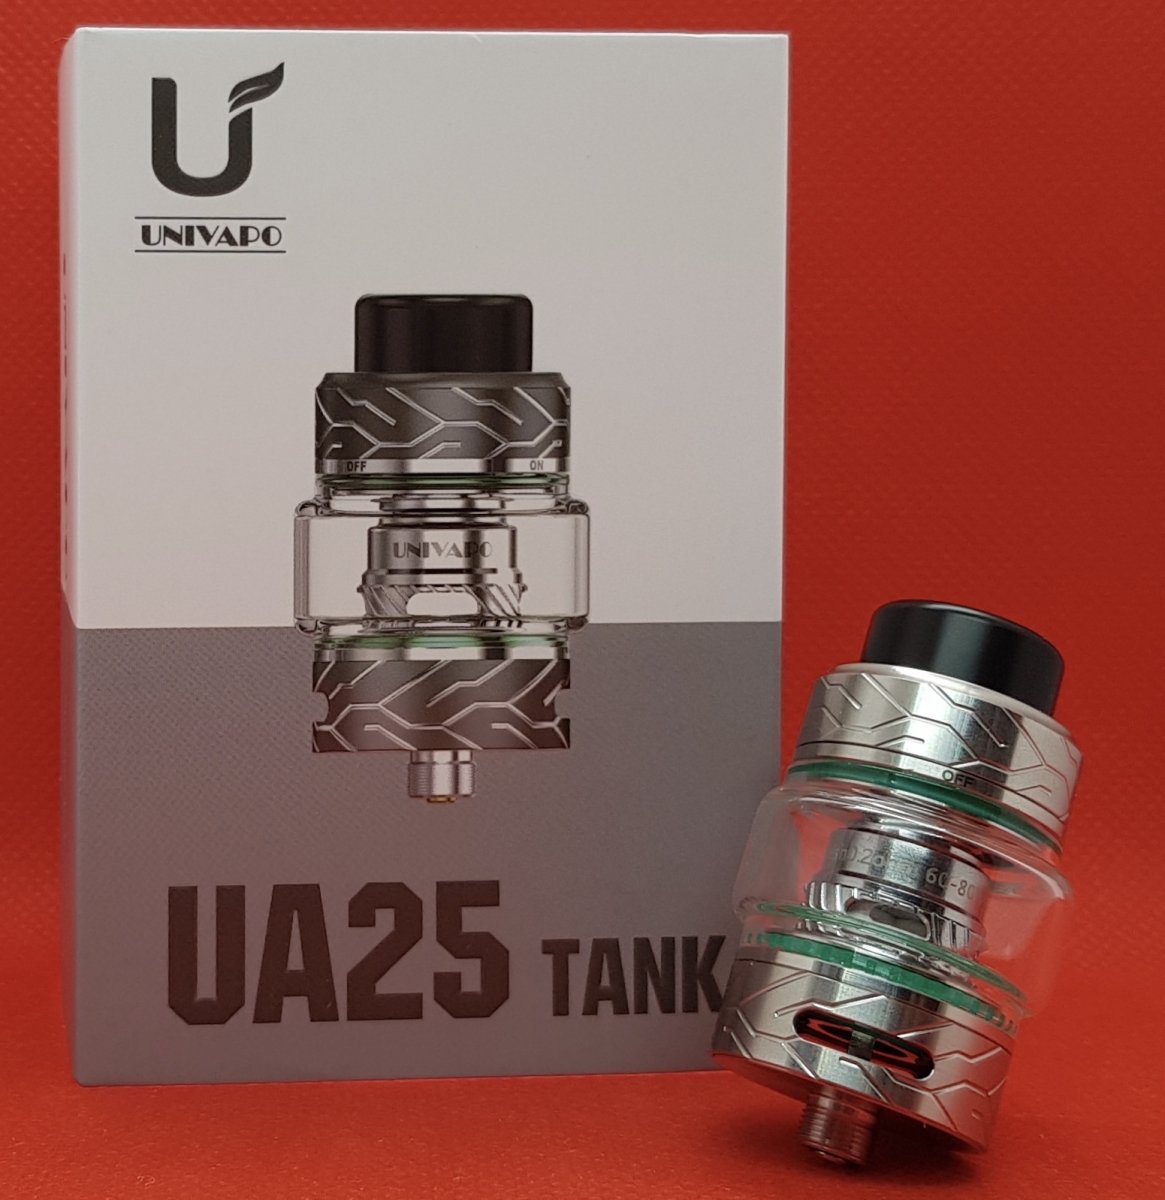 Univapo UA25 tank box fresh